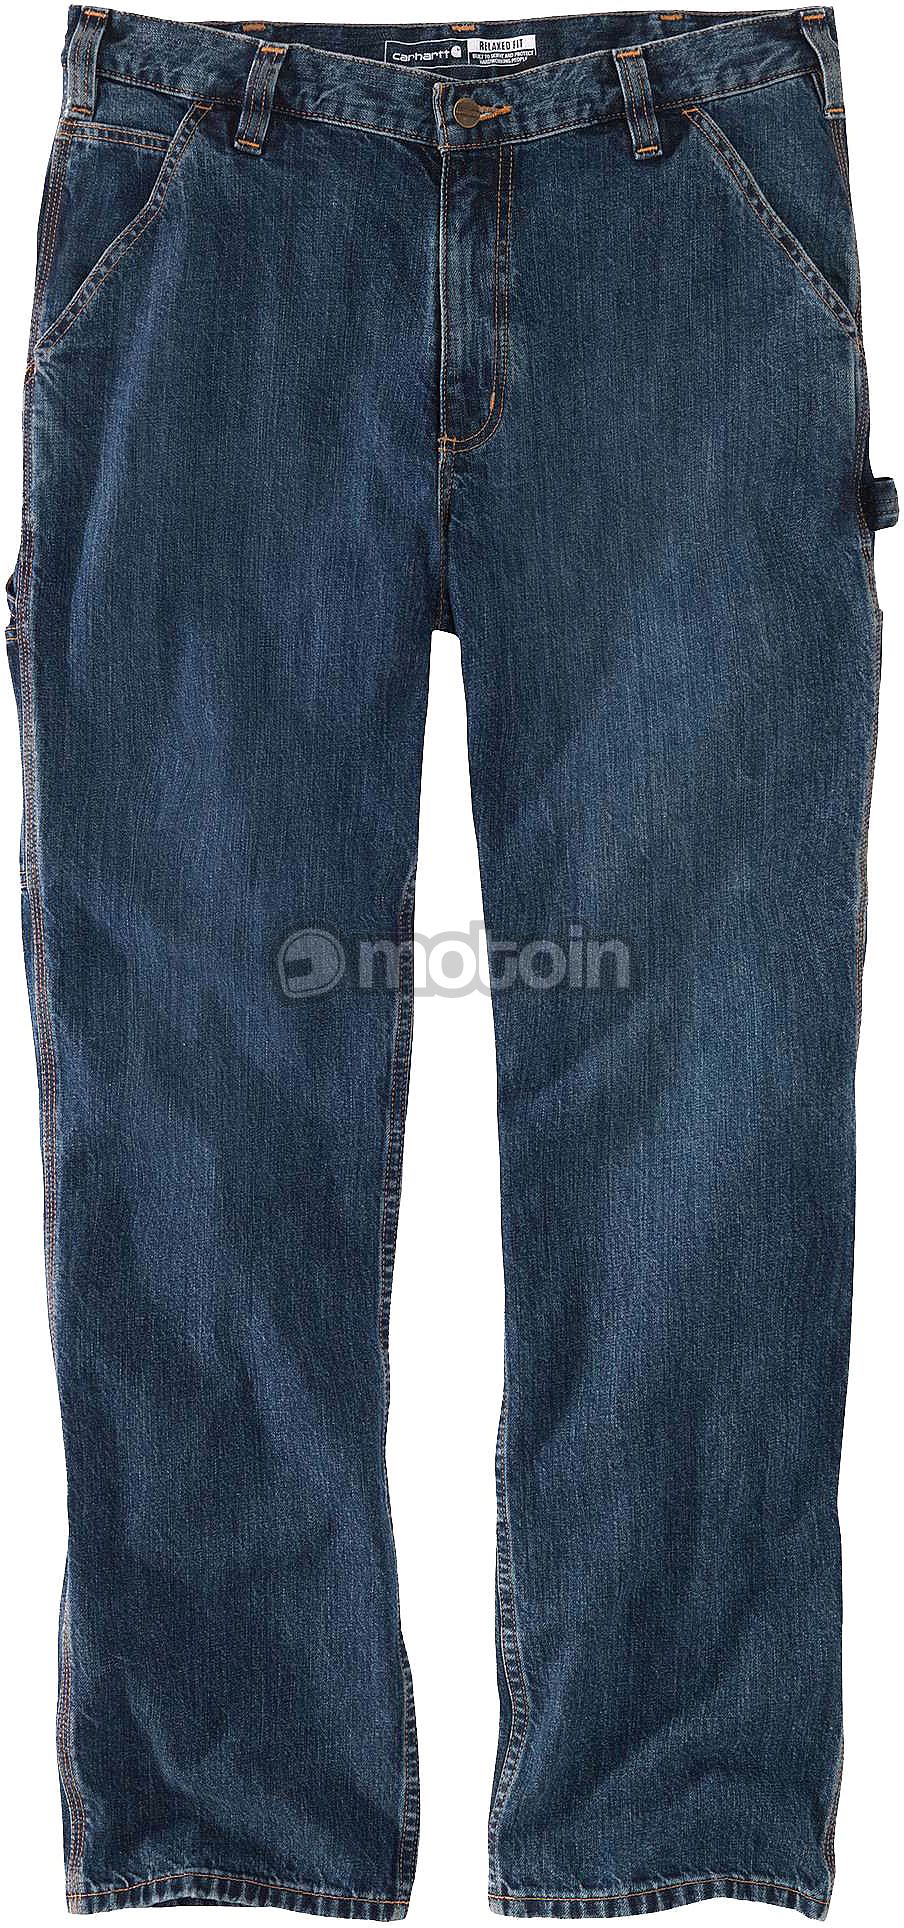 Carhartt Utility, jeans